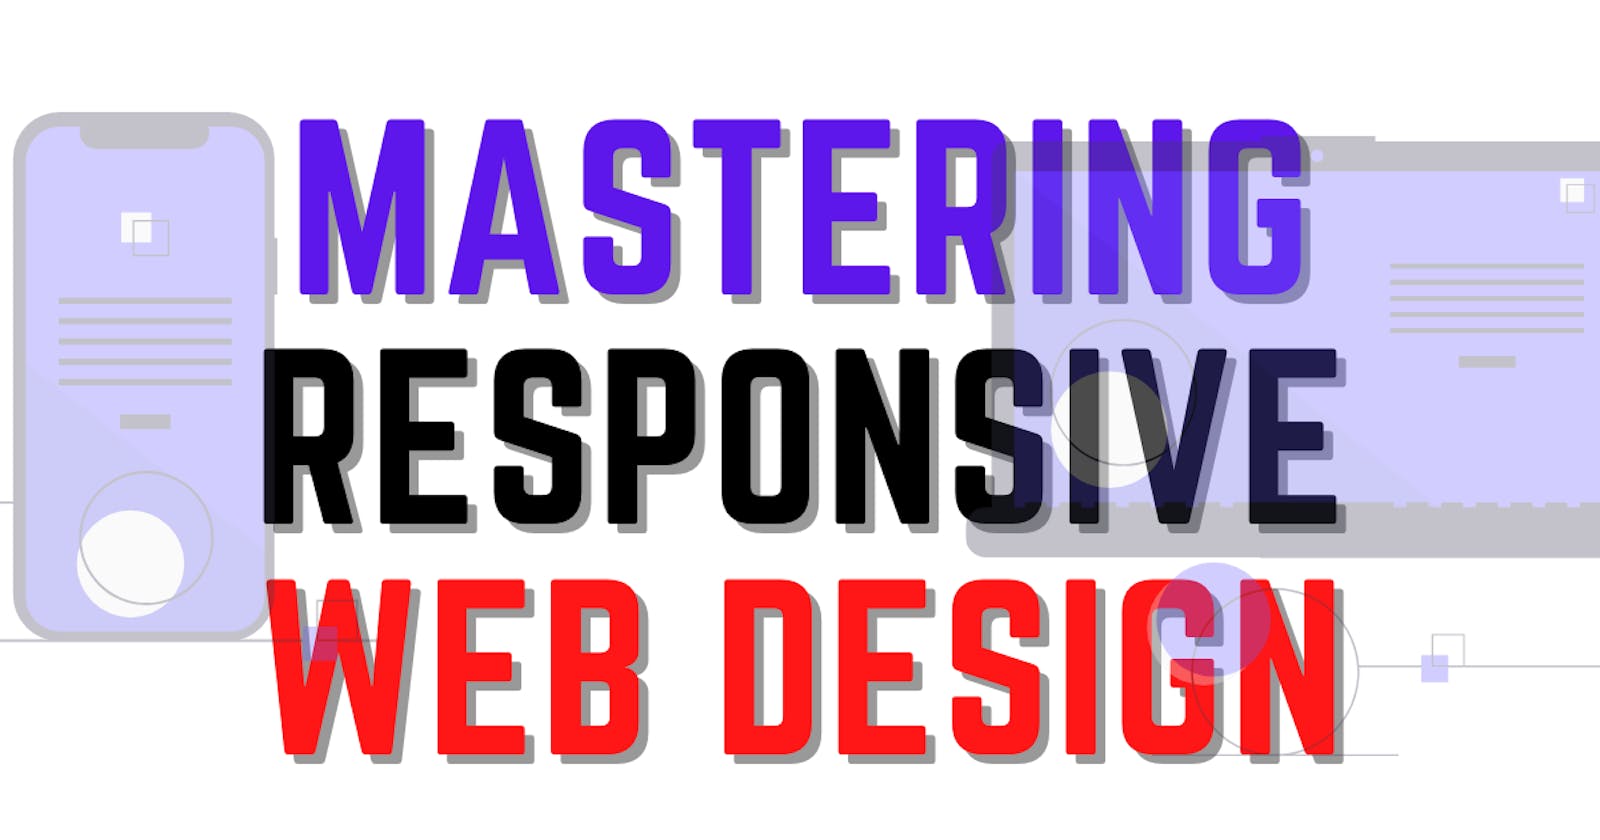 Mastering responsive Web Design